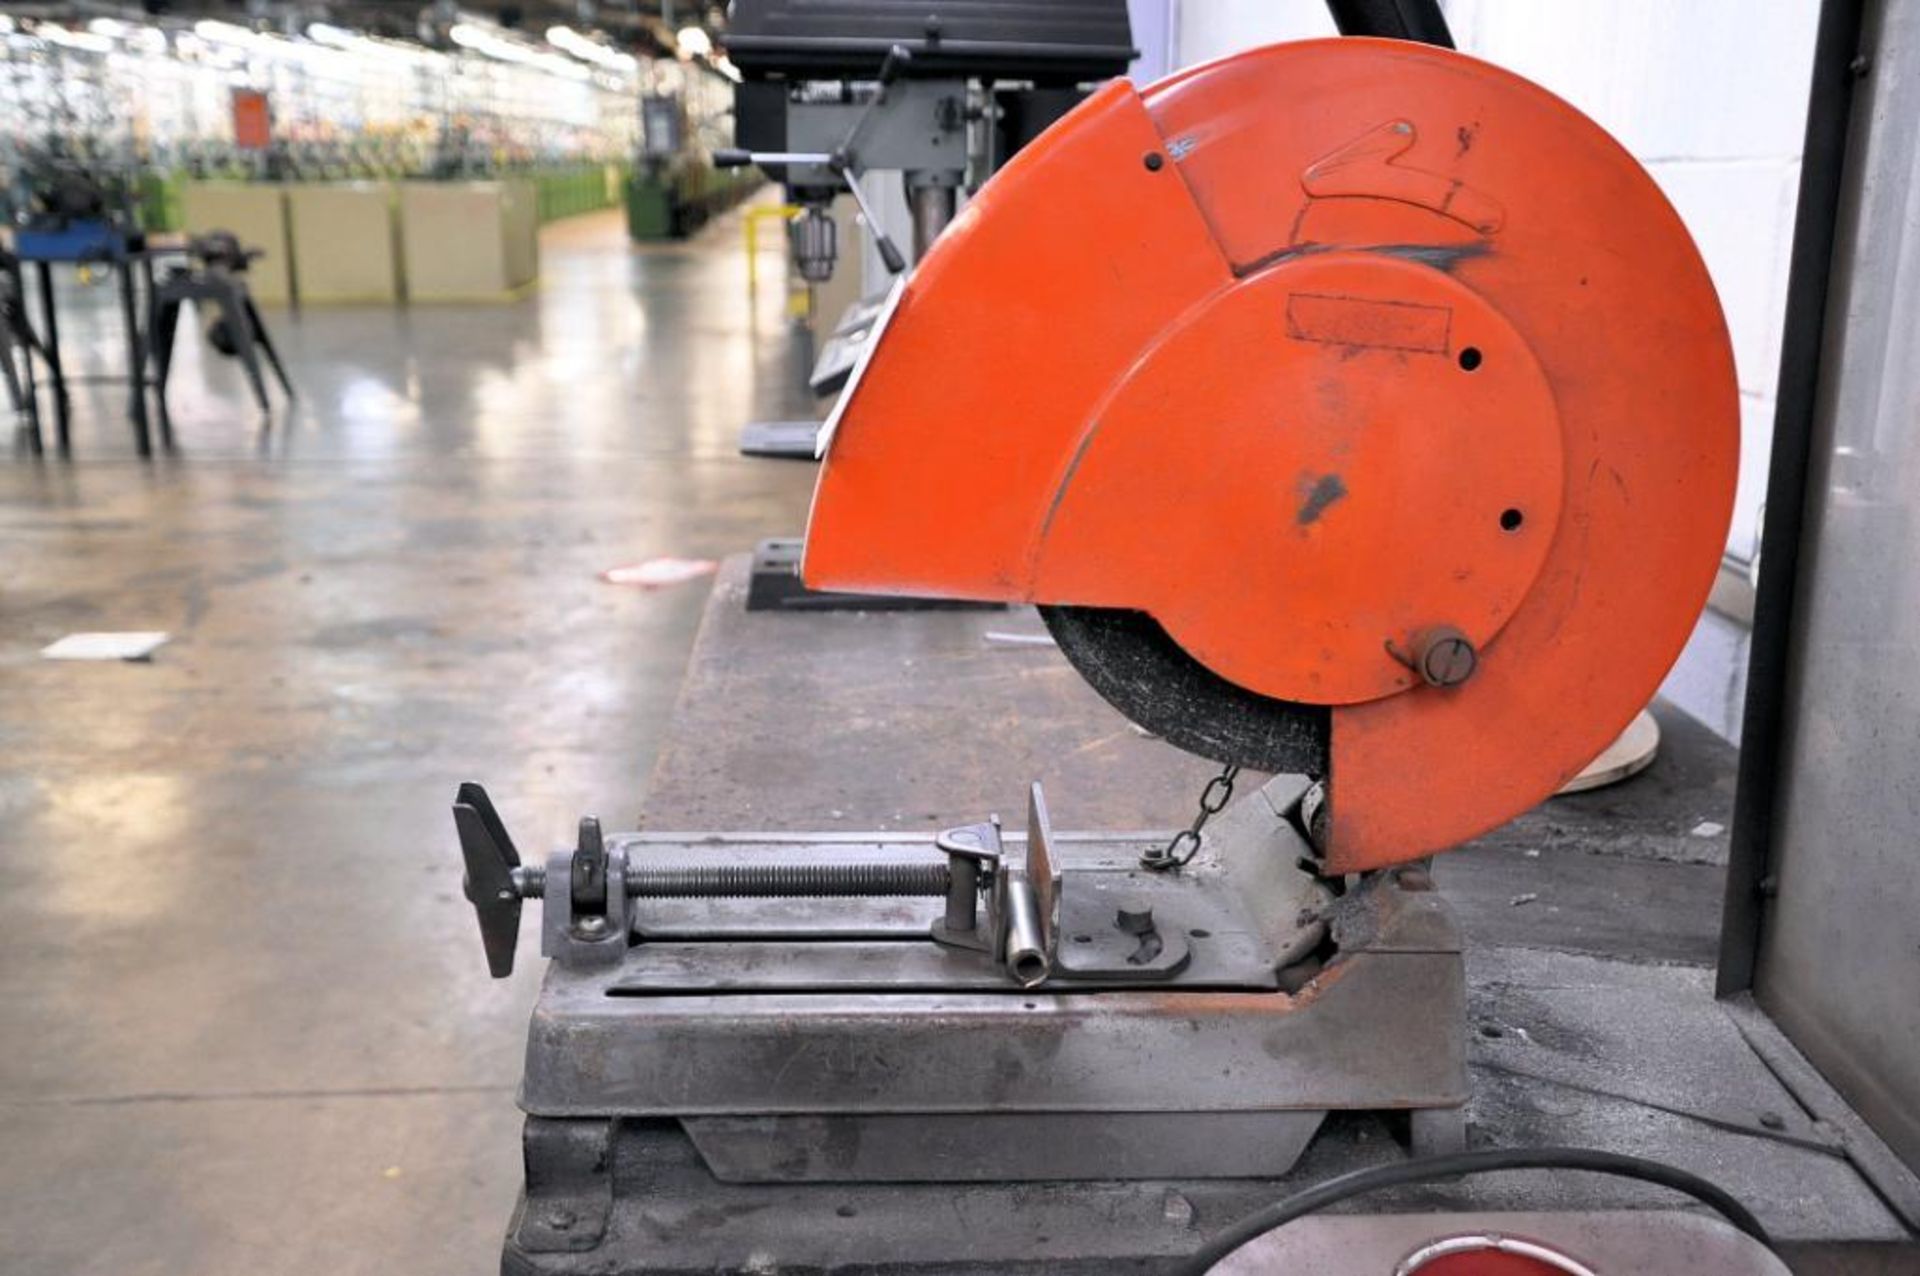 Makita Model 2414 14 in. Abrasive Cut-Off Saw, S/N: 45264; 13-Amp, 3,800-RPM